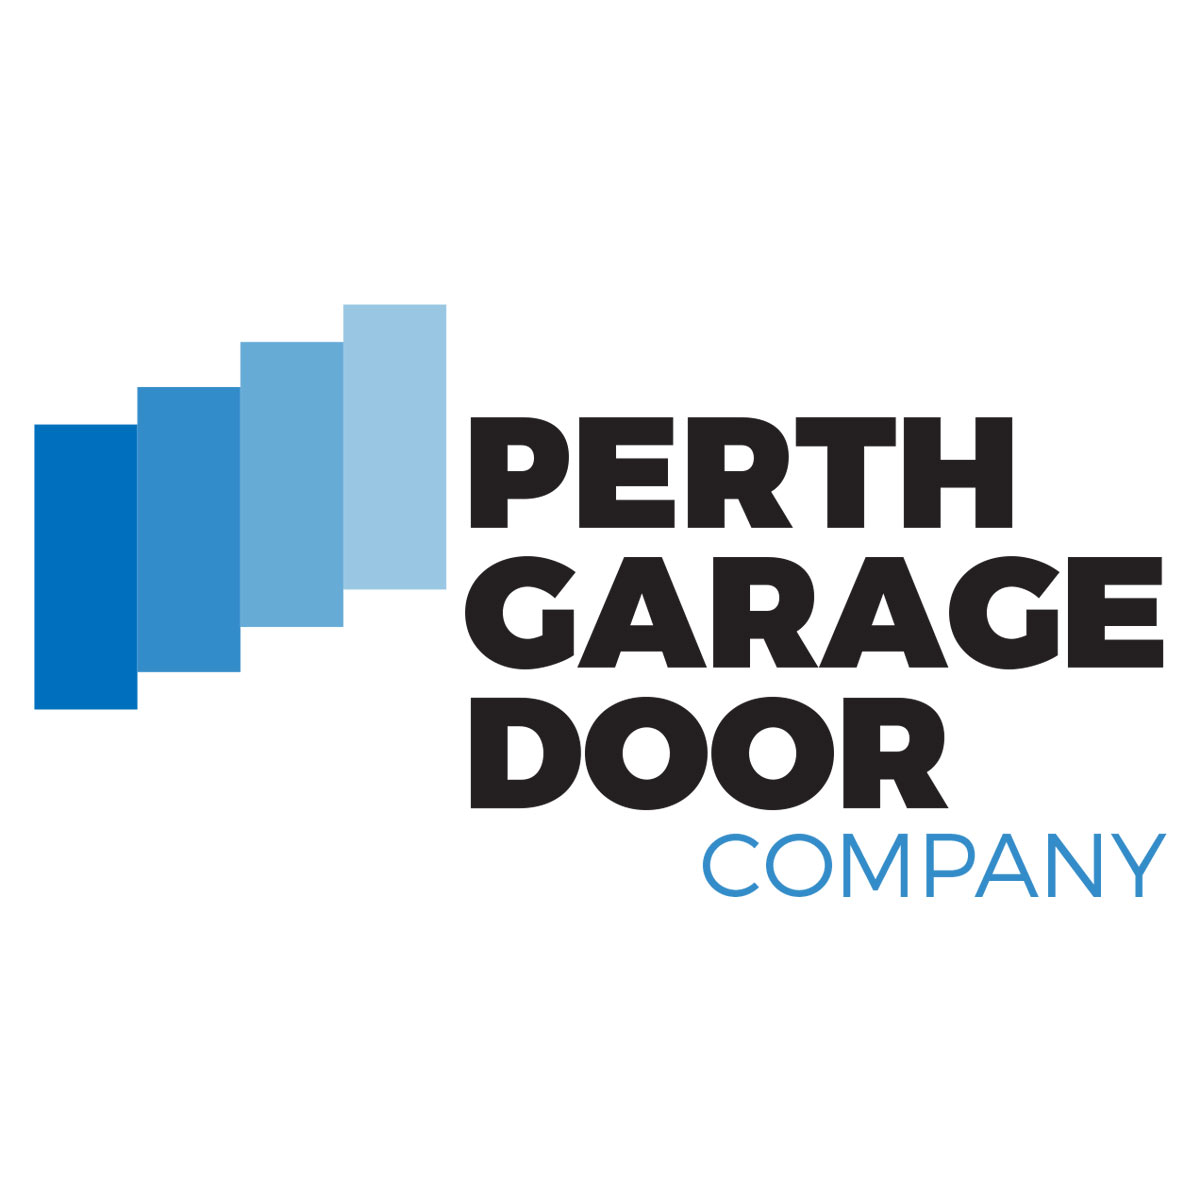 Door Garage Automatic Garage Door Residential Roll Up Garage Pertaining To Sizing 1600 X 900 Residential Doors Garage Doors Automatic Garage